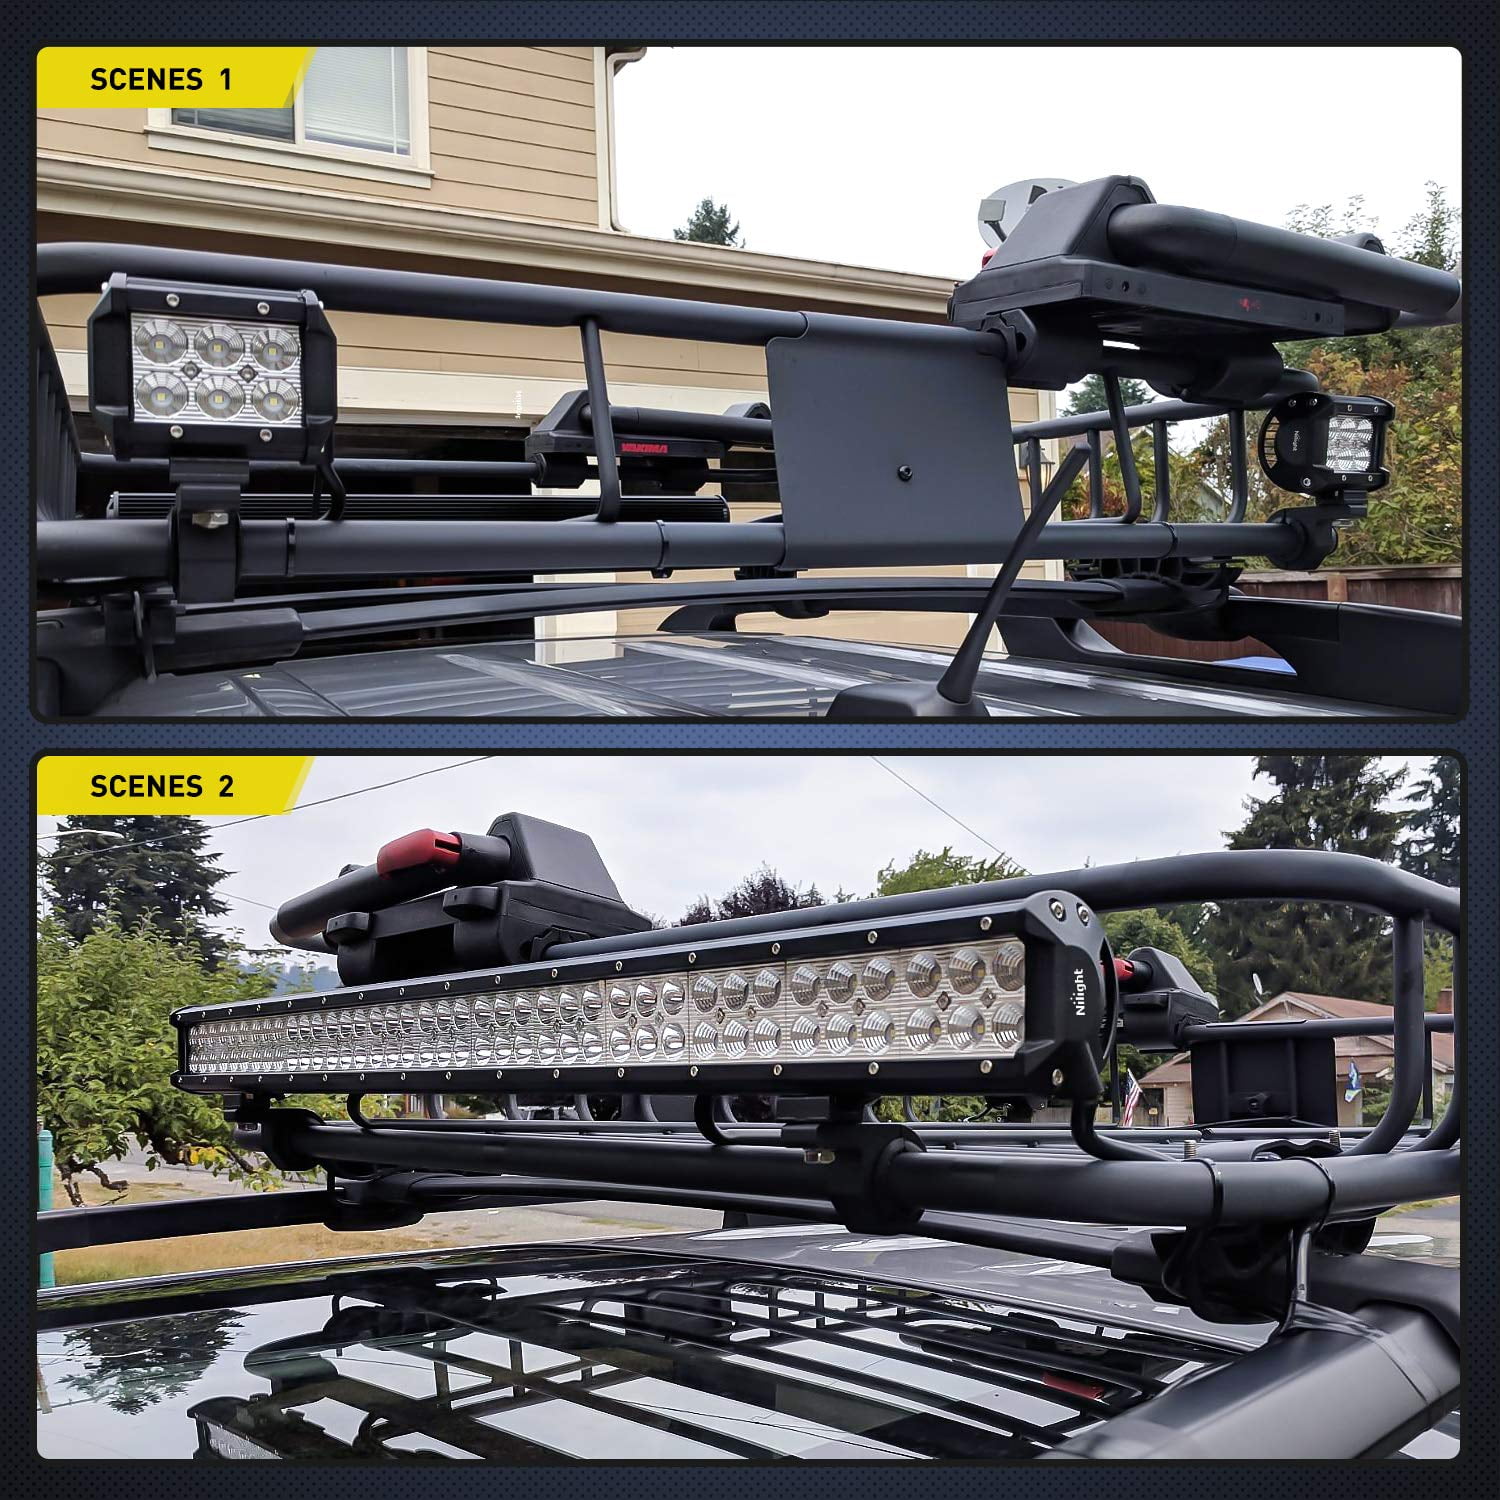 4PCS LED Light Horizontal Clamp Mounting Kit Fit on 0.75 1 1.25 Bull Bars Roof Racks Roll Cages for ATV UTV and Trucks Mini 2 Years Warranty Nilight 90028D 4-Pack 